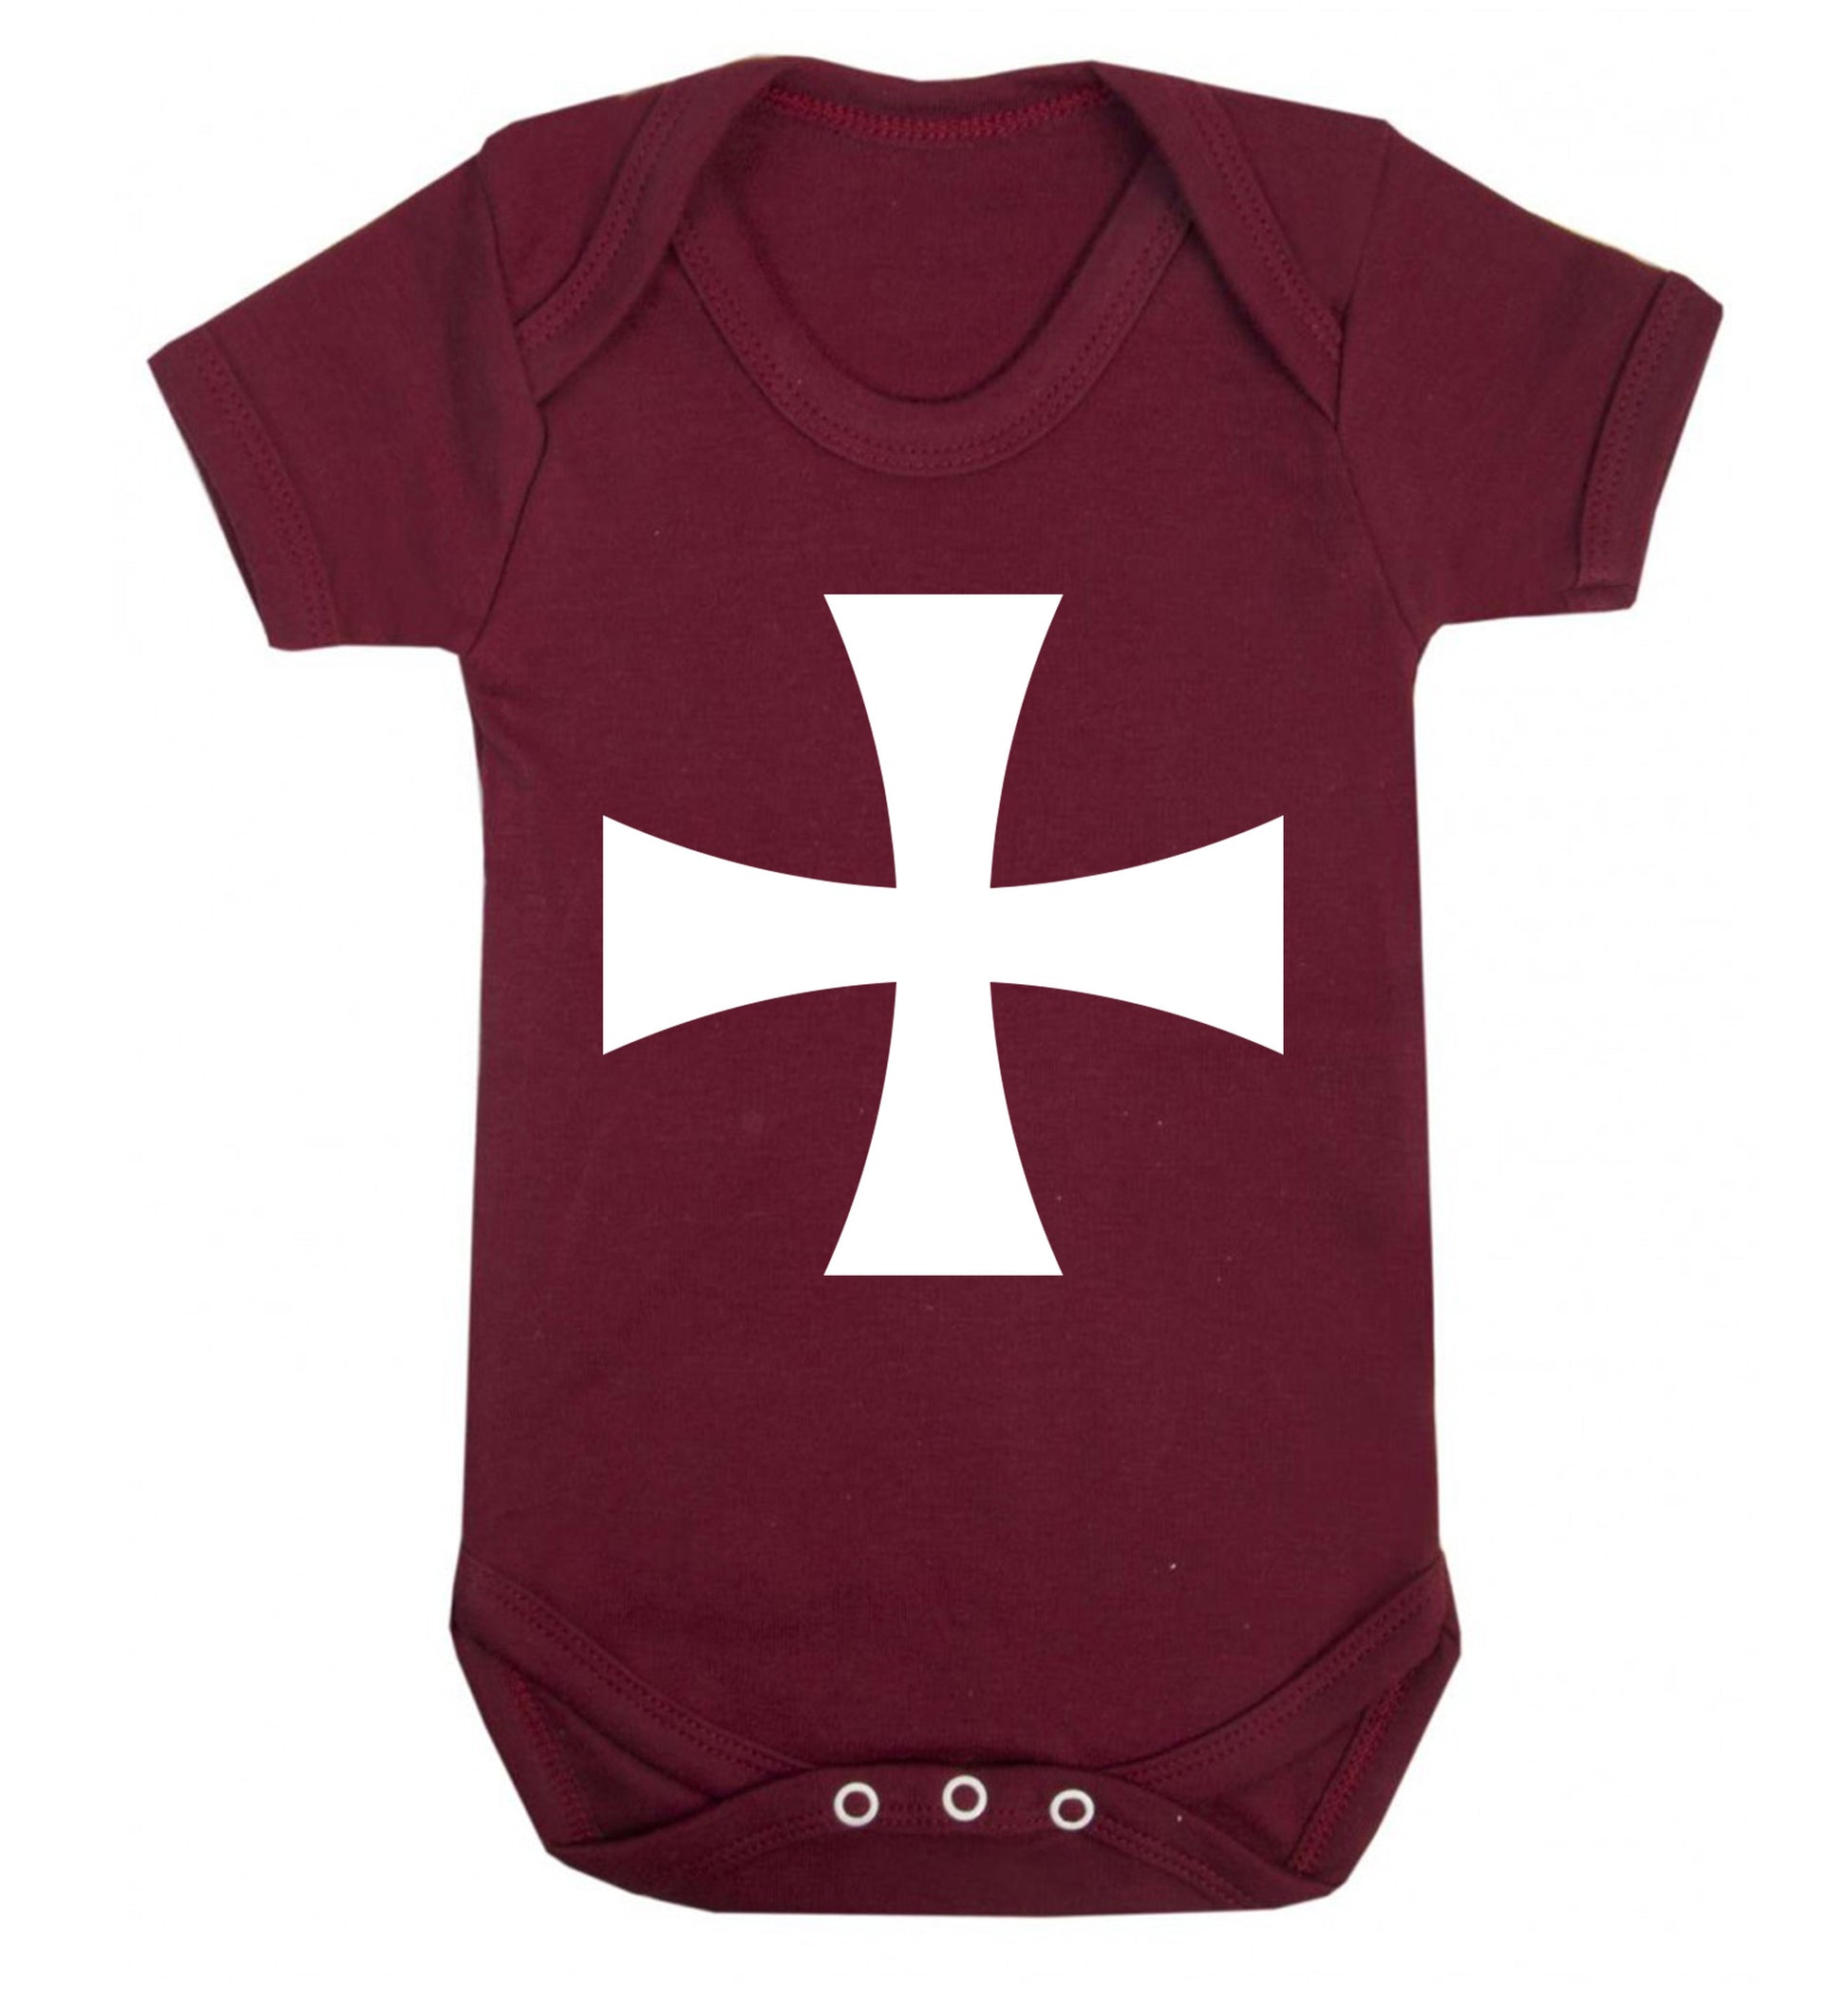 Knights Templar cross Baby Vest maroon 18-24 months